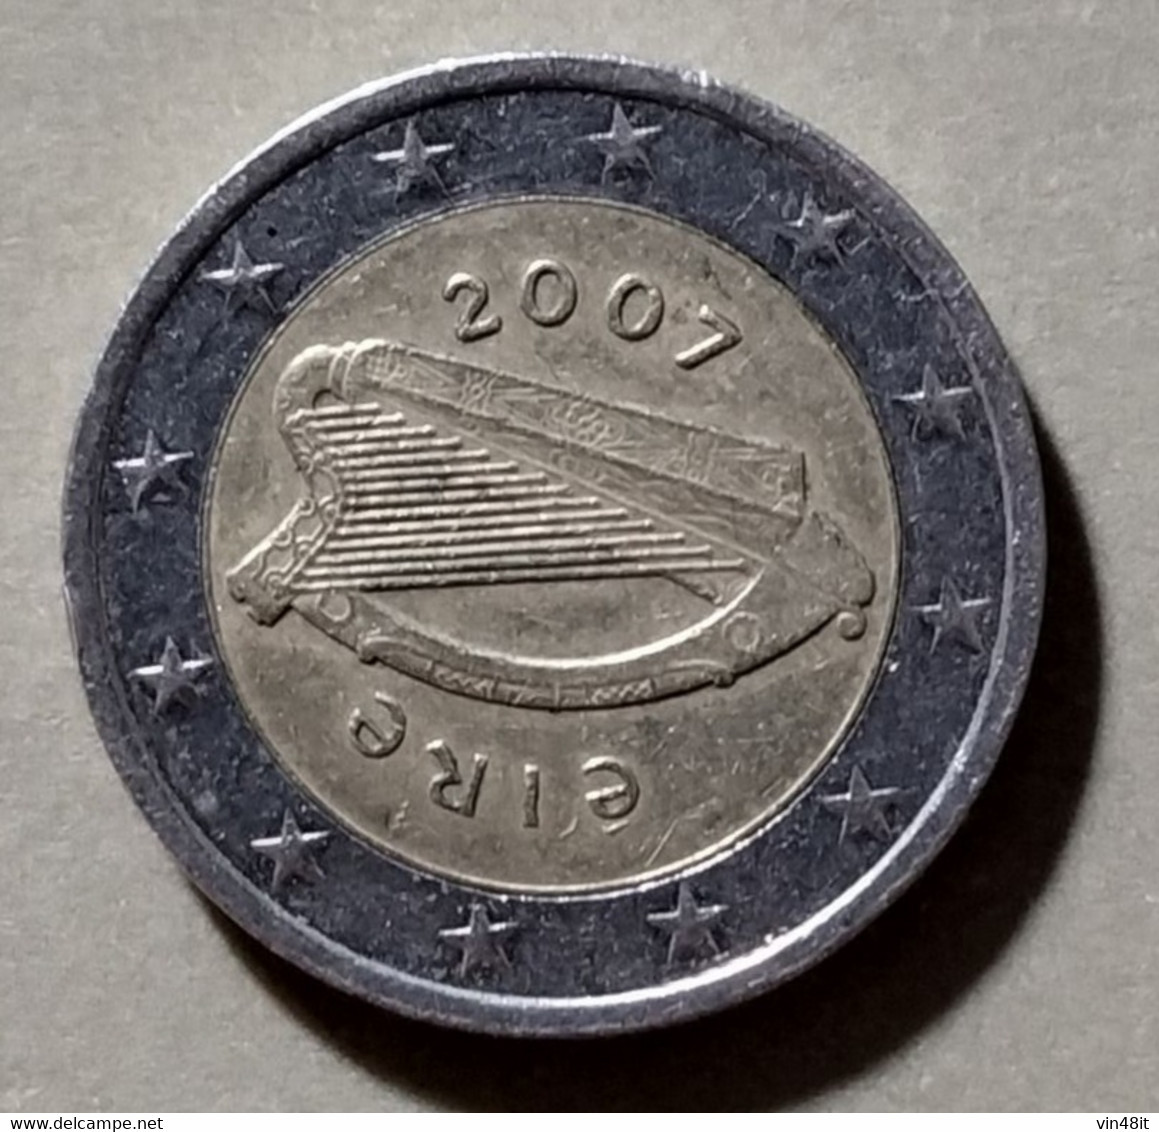 2007 - IRLANDA  - MONETA IN EURO - DEL VALORE DI  2,00  EURO   - USATA - Irland